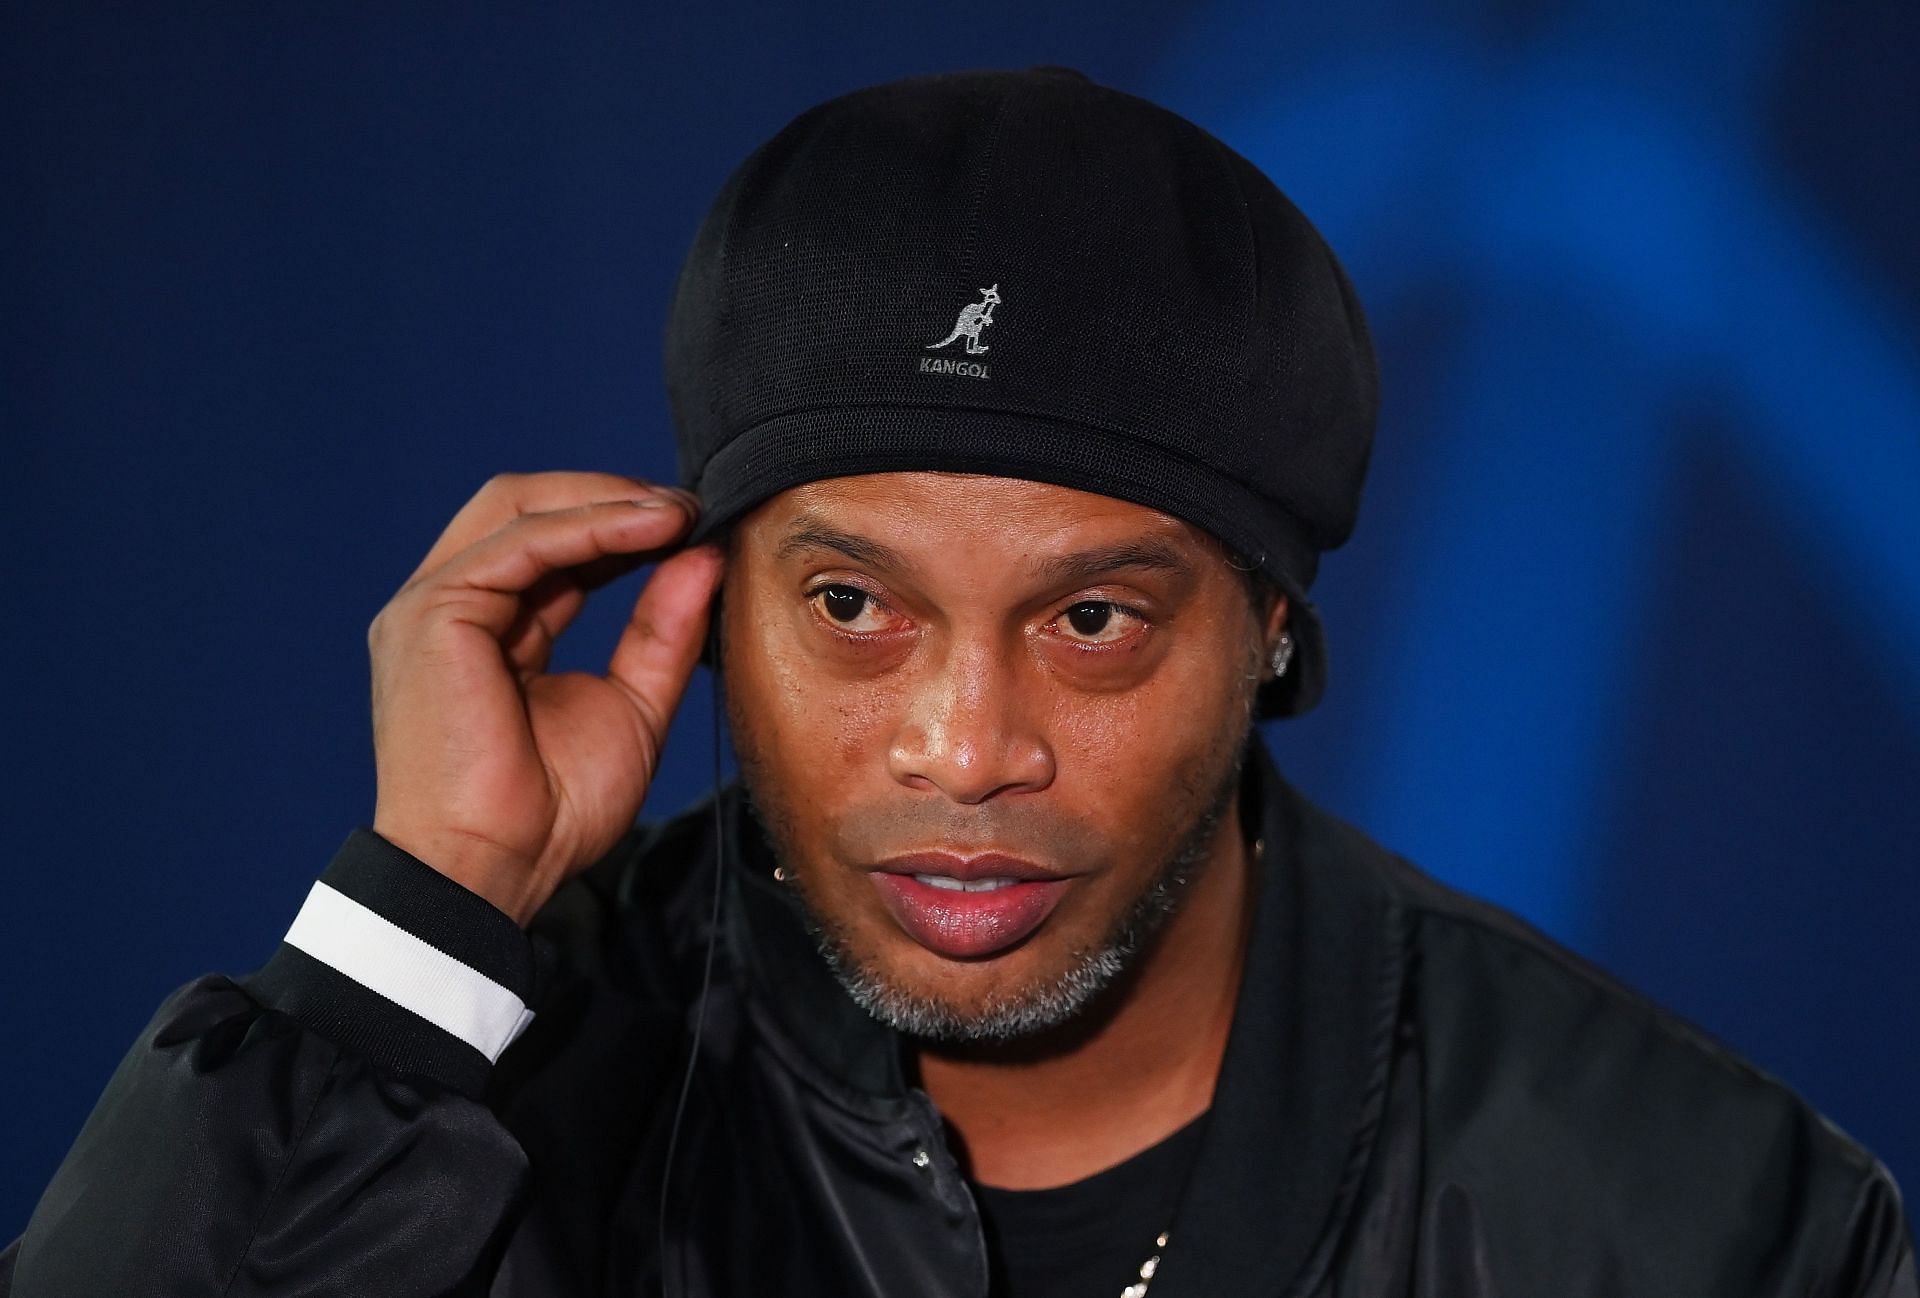 Soccer icon Ronaldinho was in attendance for the Miami Heat versus Toronto Raptors game